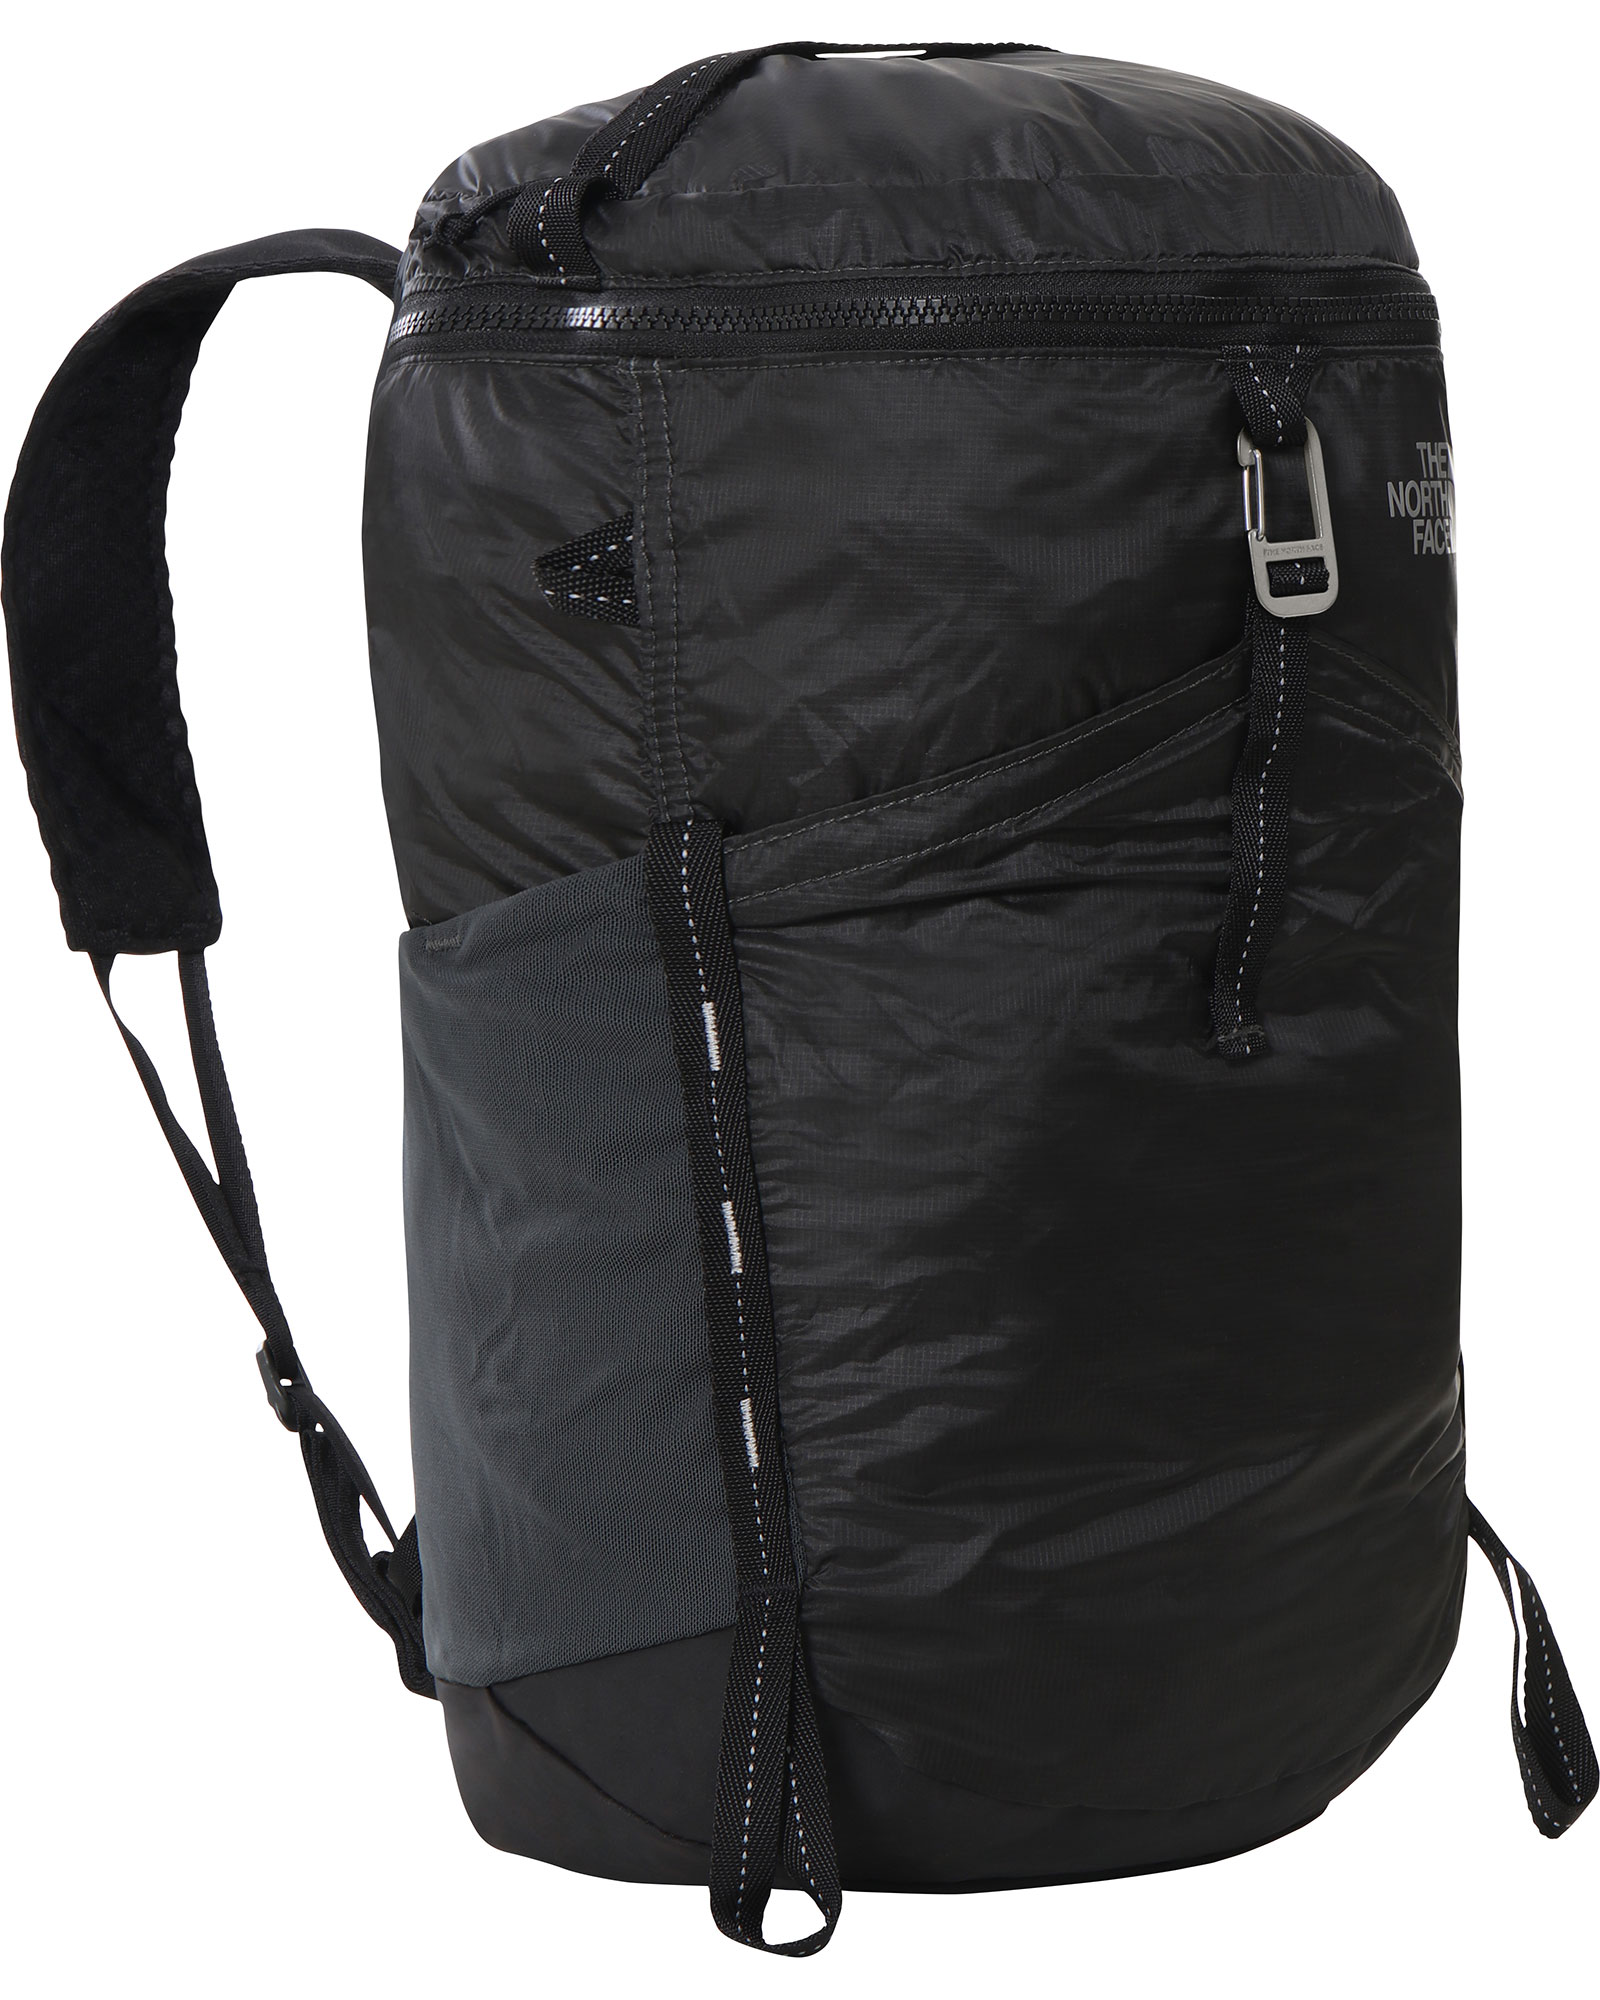 The North Face Flyweight Backpack - Asphalt Grey/TNF Black